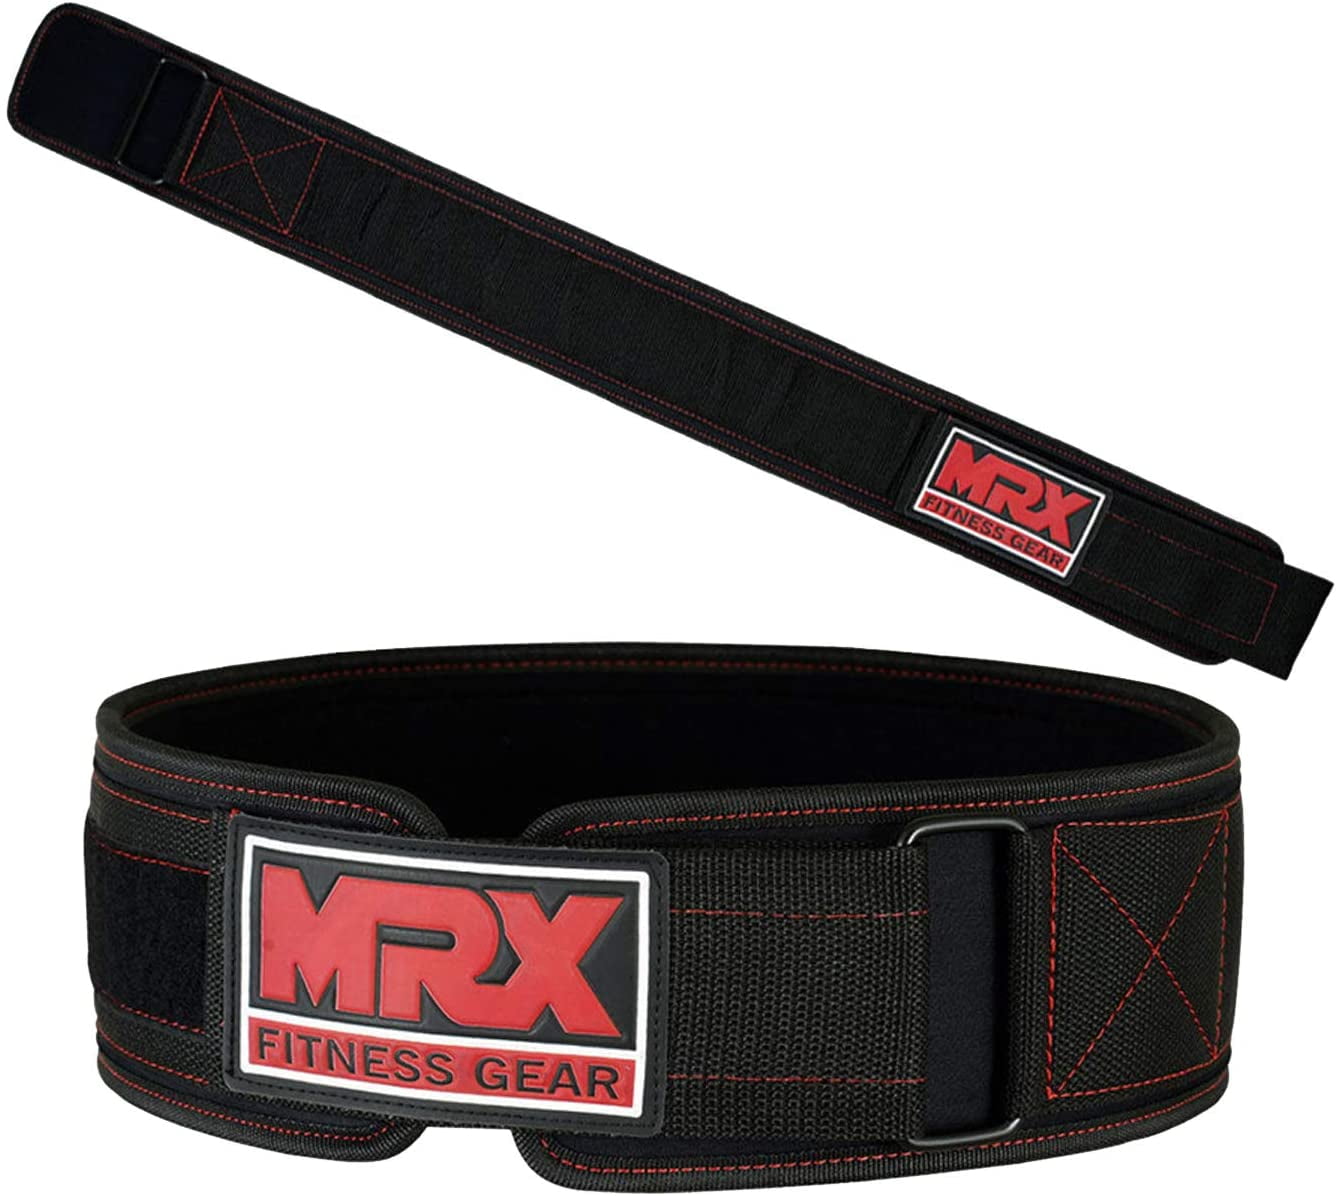 MRX Weight Lifting Belt 4" Back Support Fitness Gym Training Bodybuilding Men US 